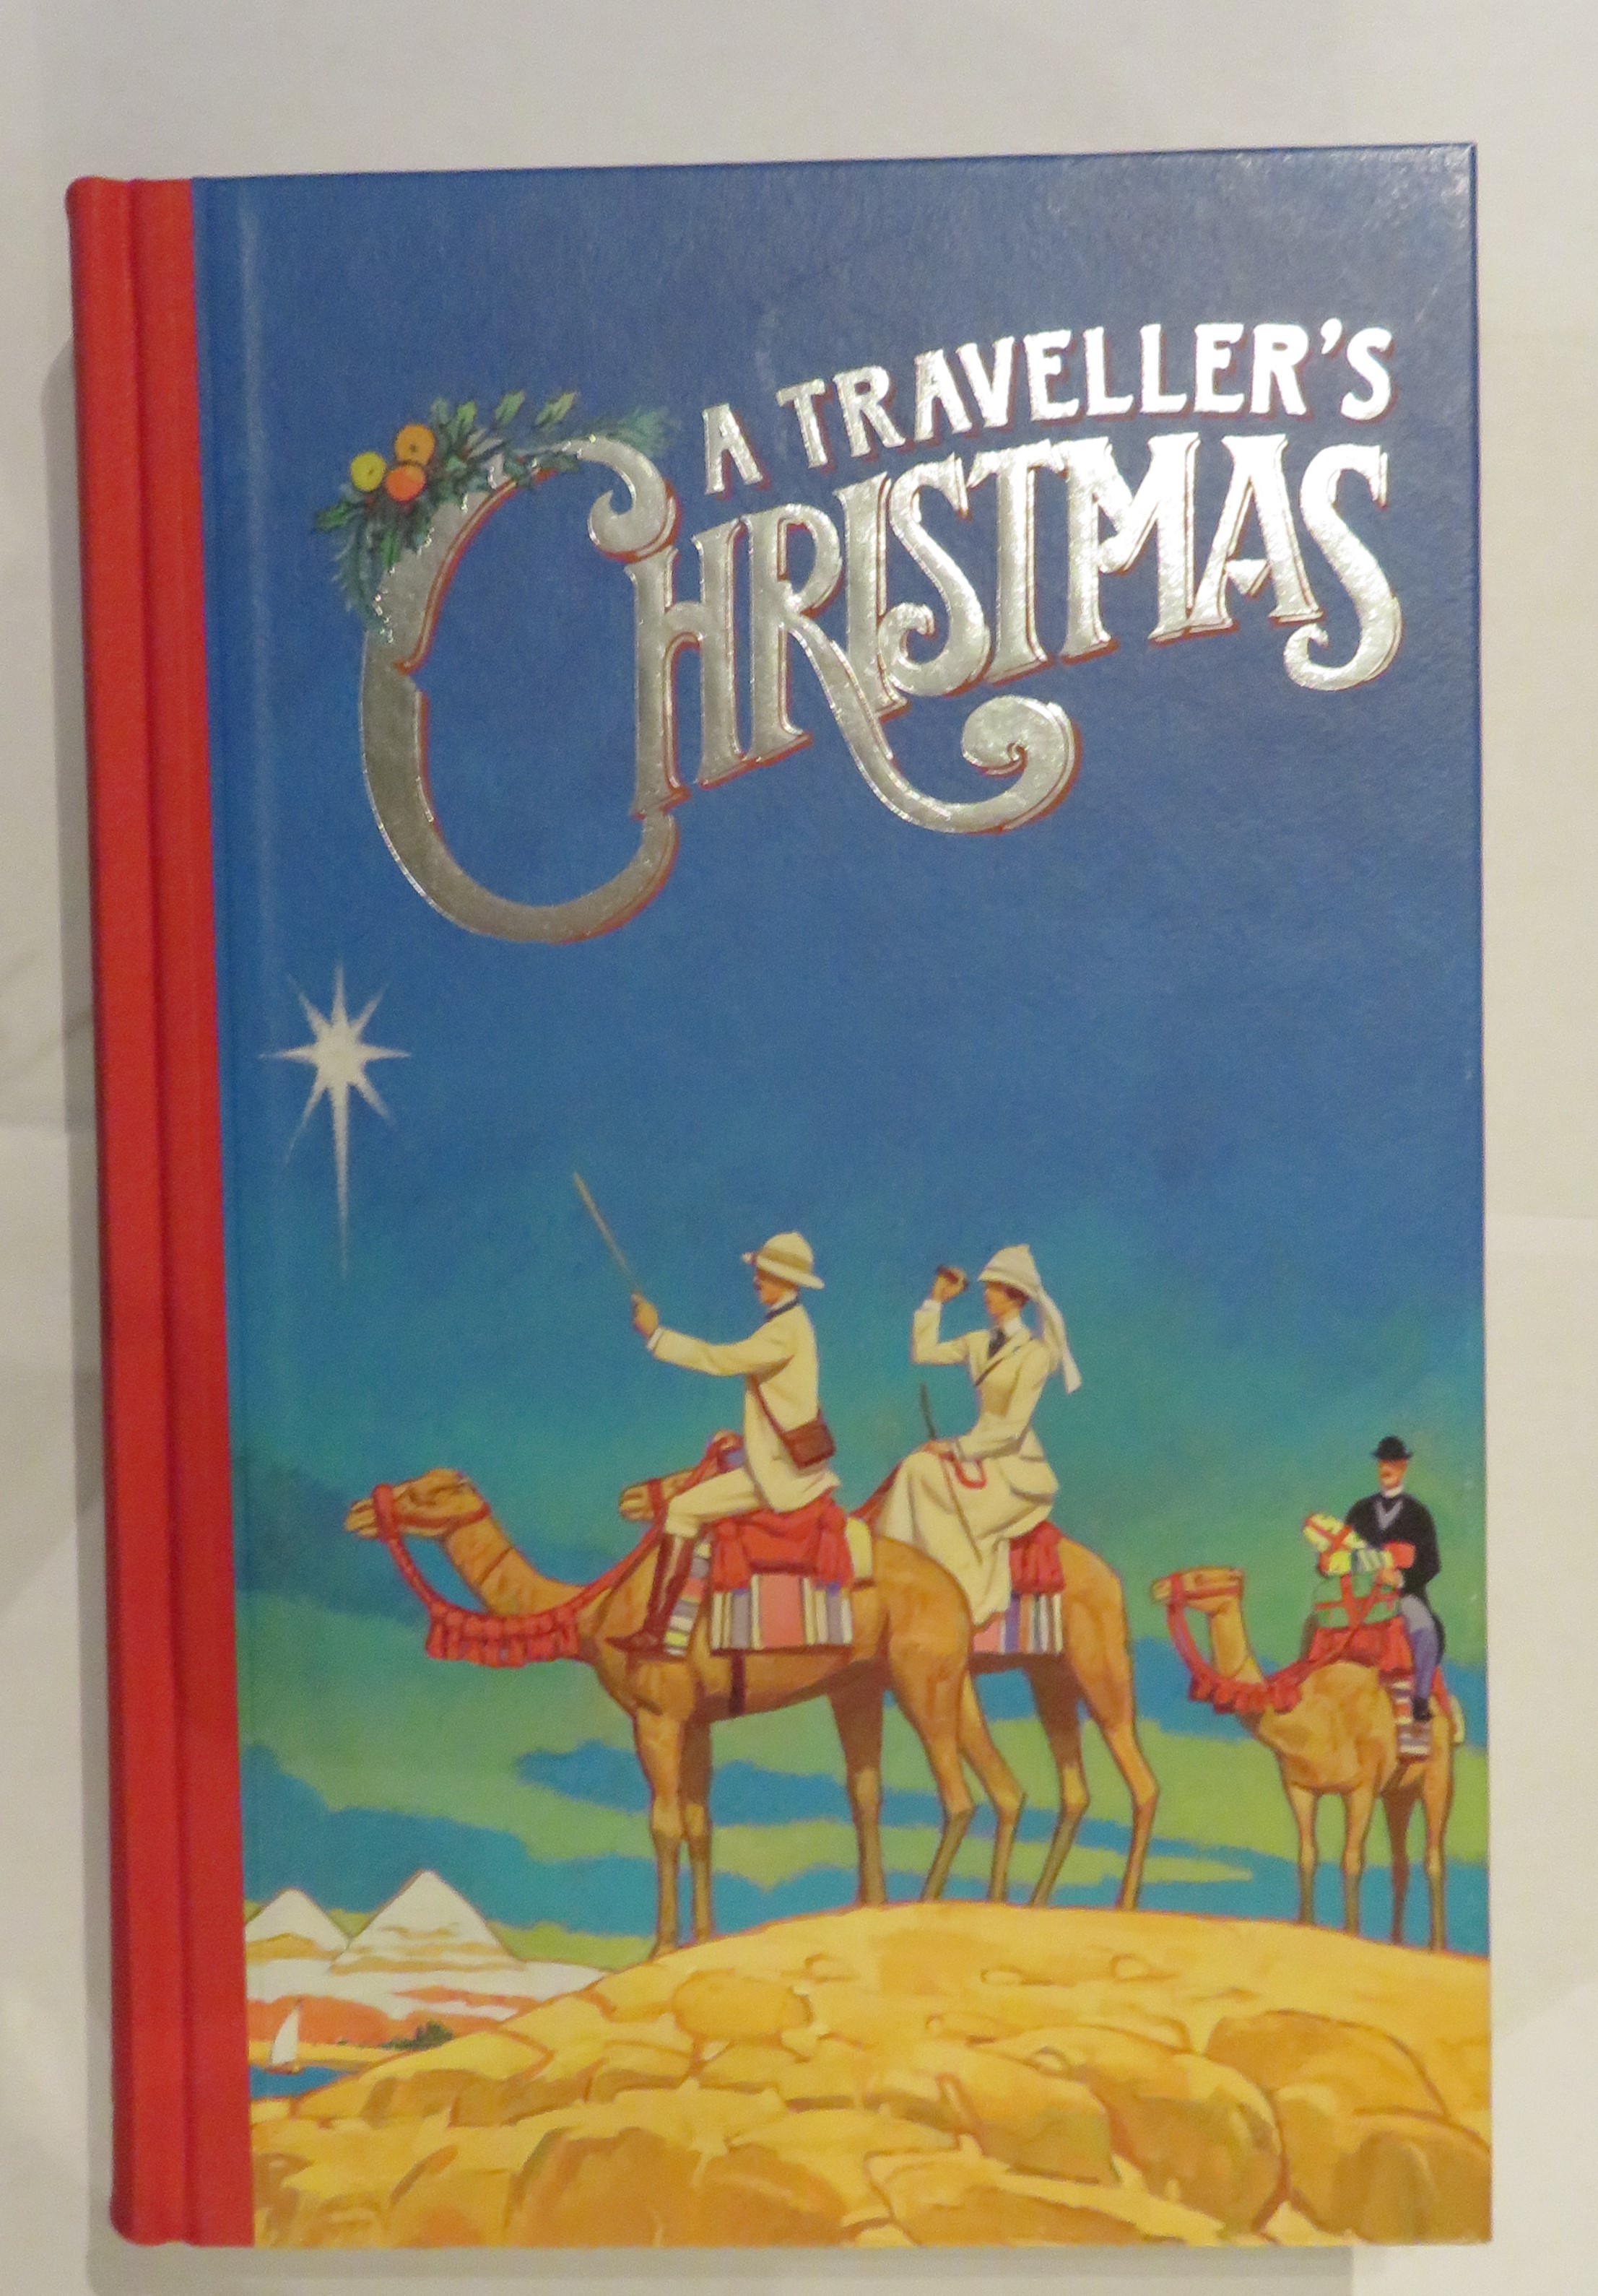 A Traveller's Christmas